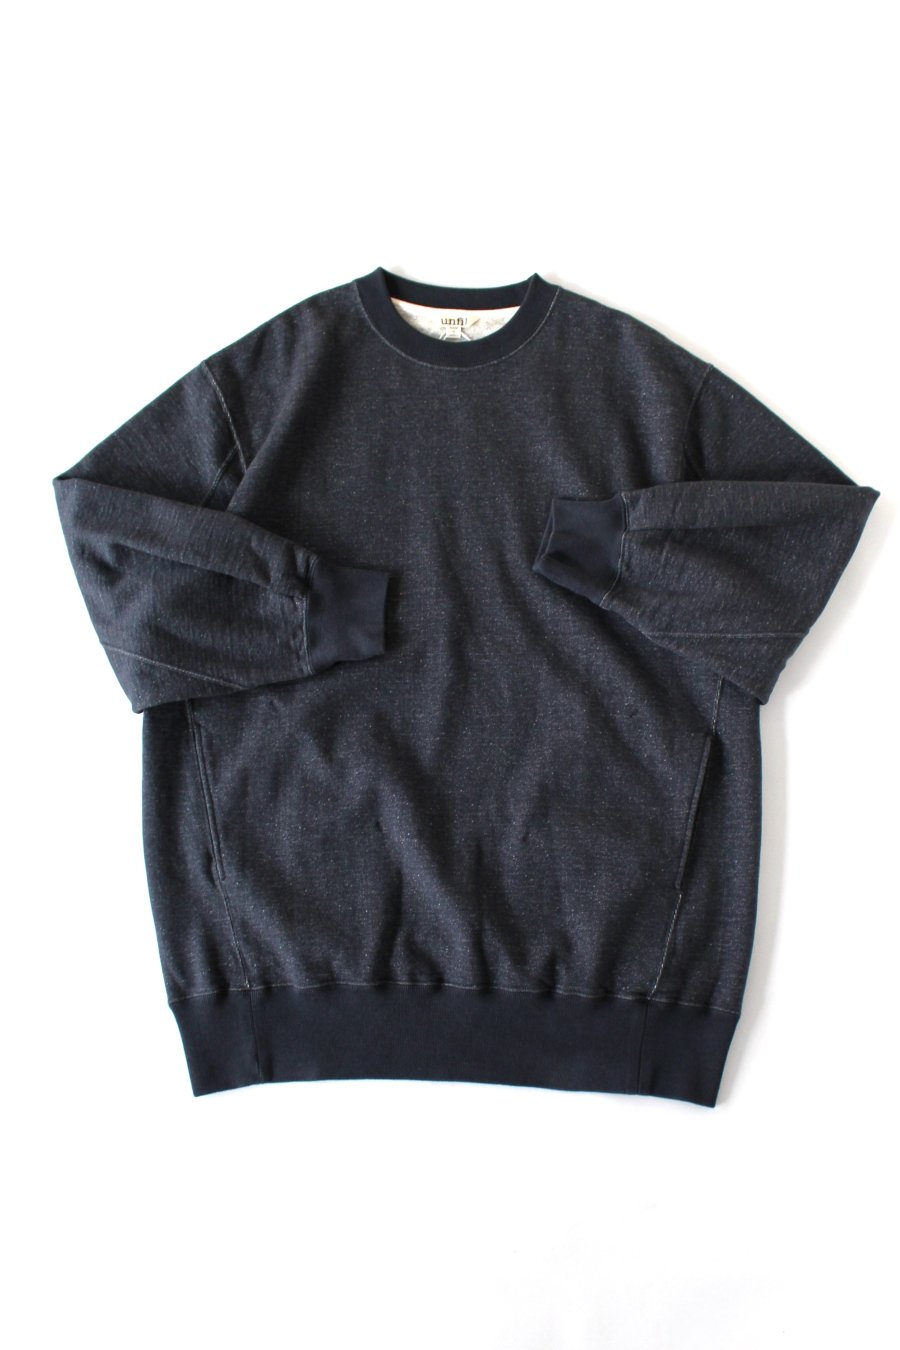 unfil（アンフィル）vintage cotton fleece oversized sweatshirt 公式通販